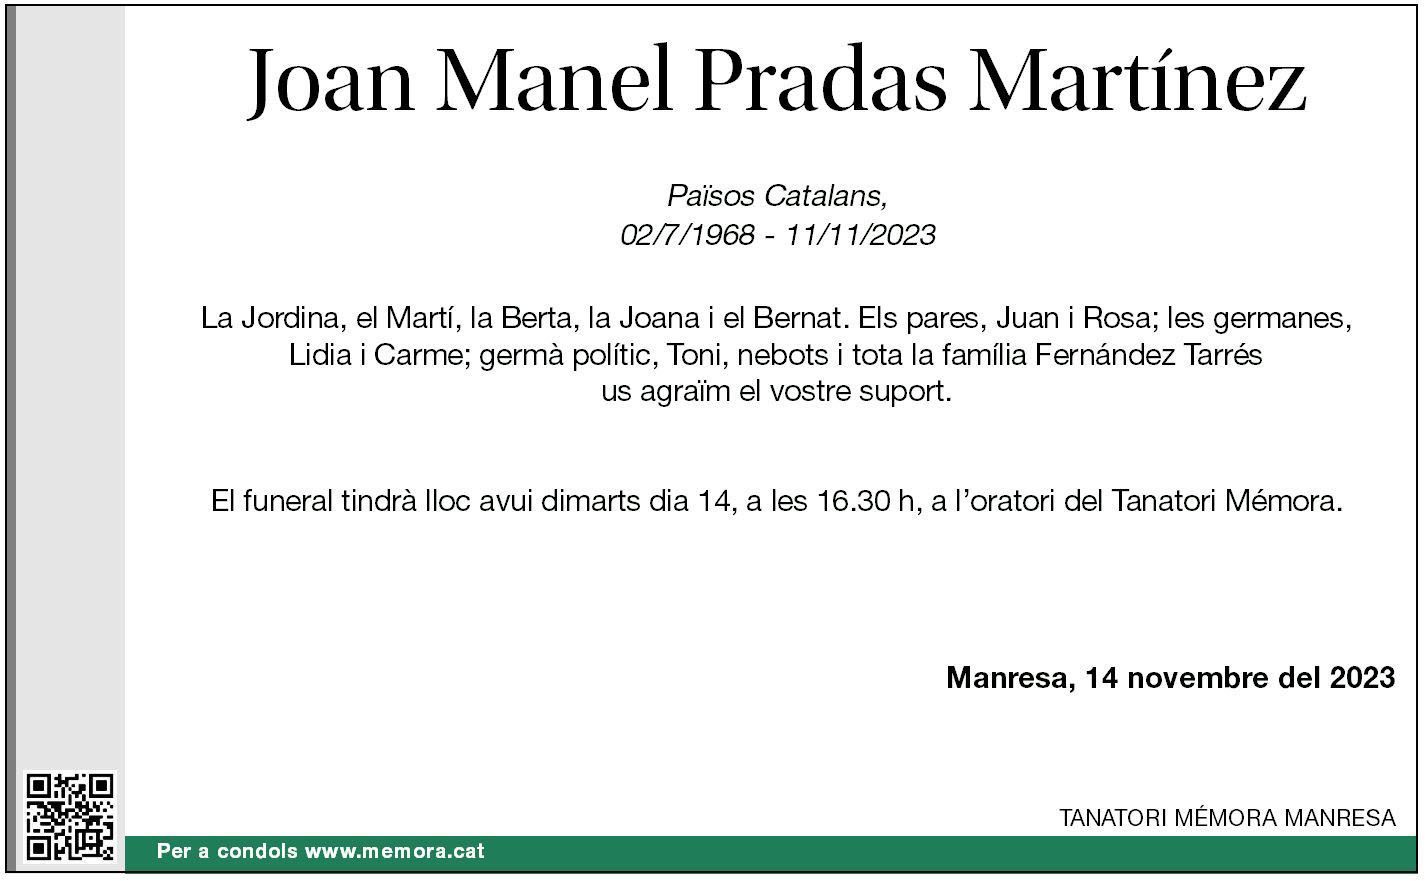 JOAN MANEL PRADAS MARTÍNEZ